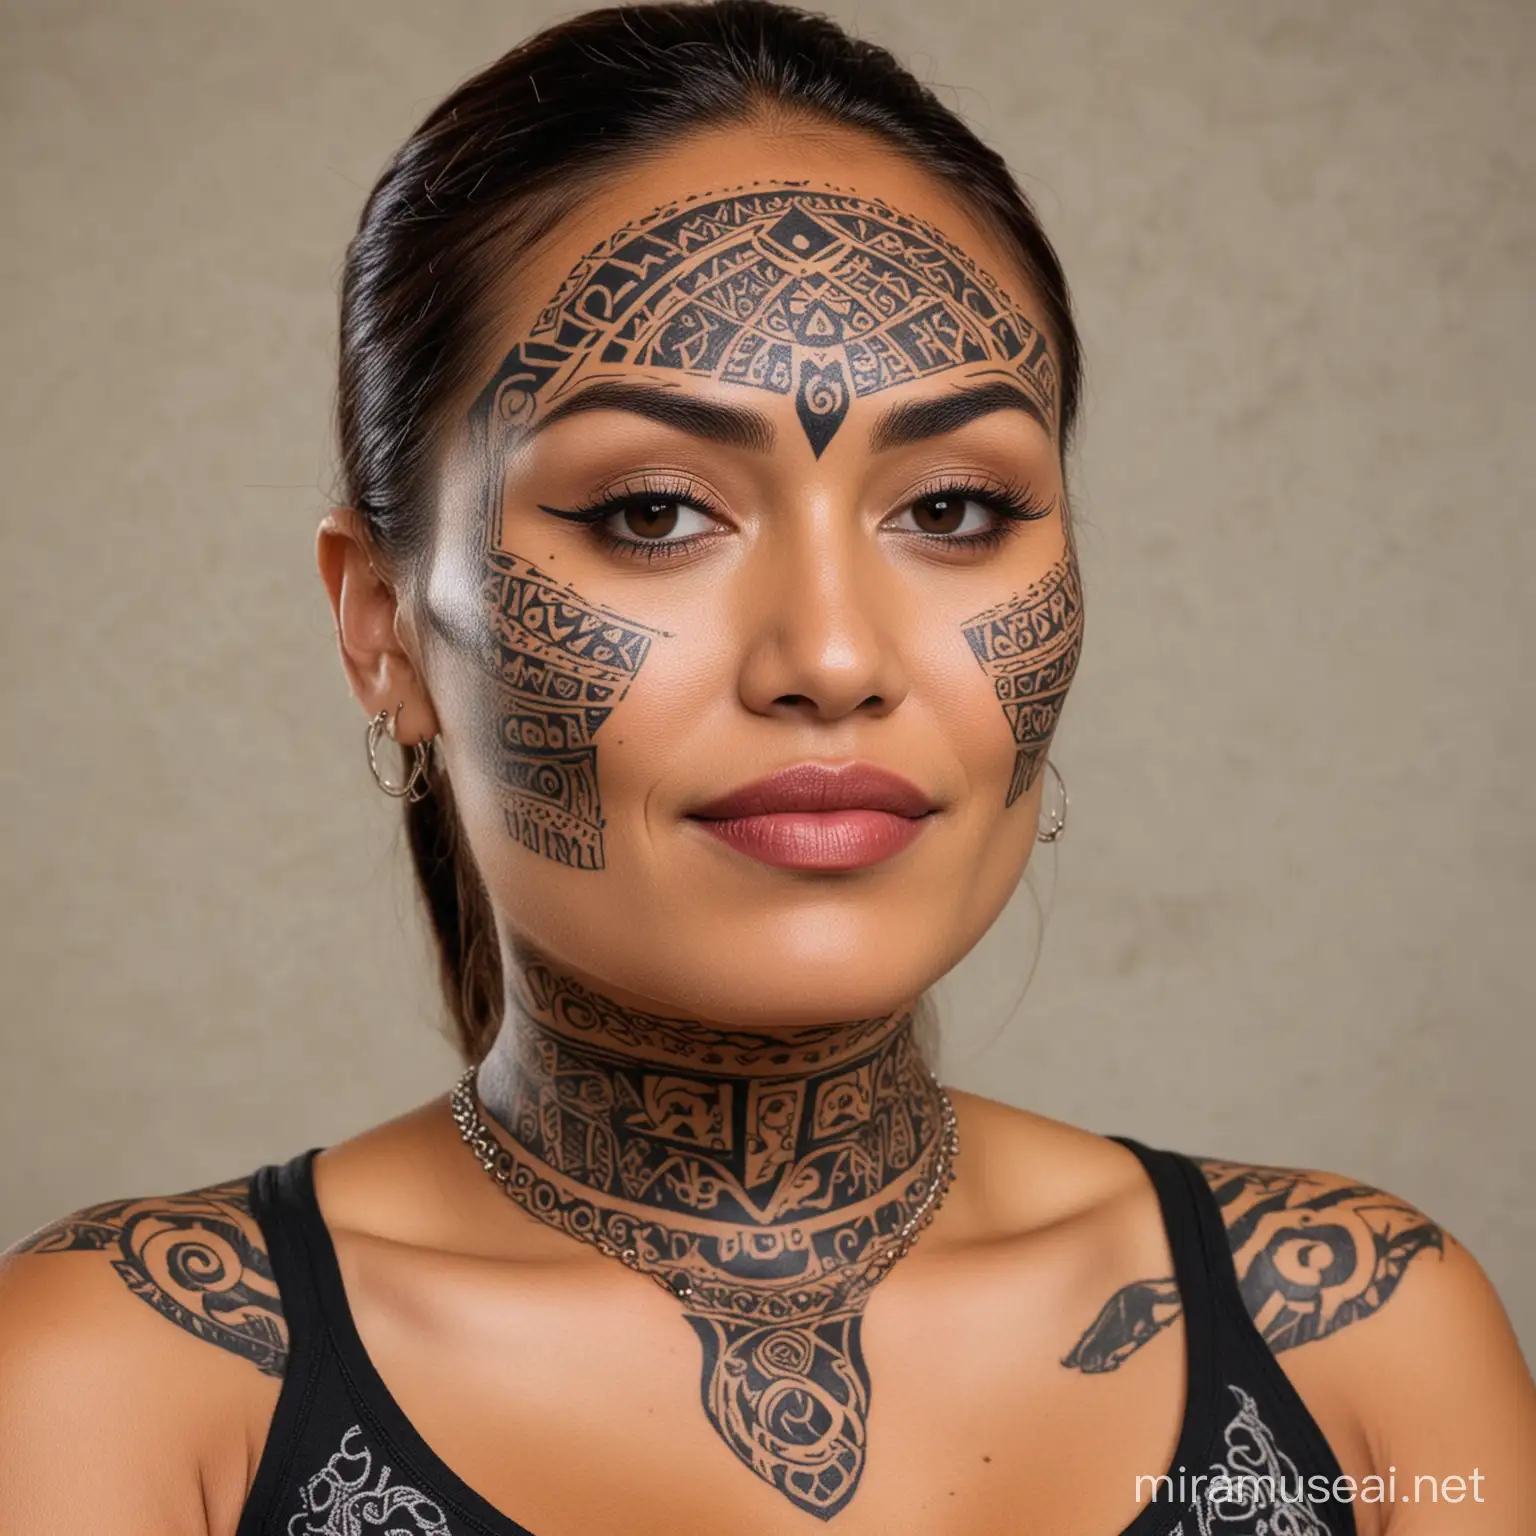 Sexy maori lady with traditional tatoo on her chin.